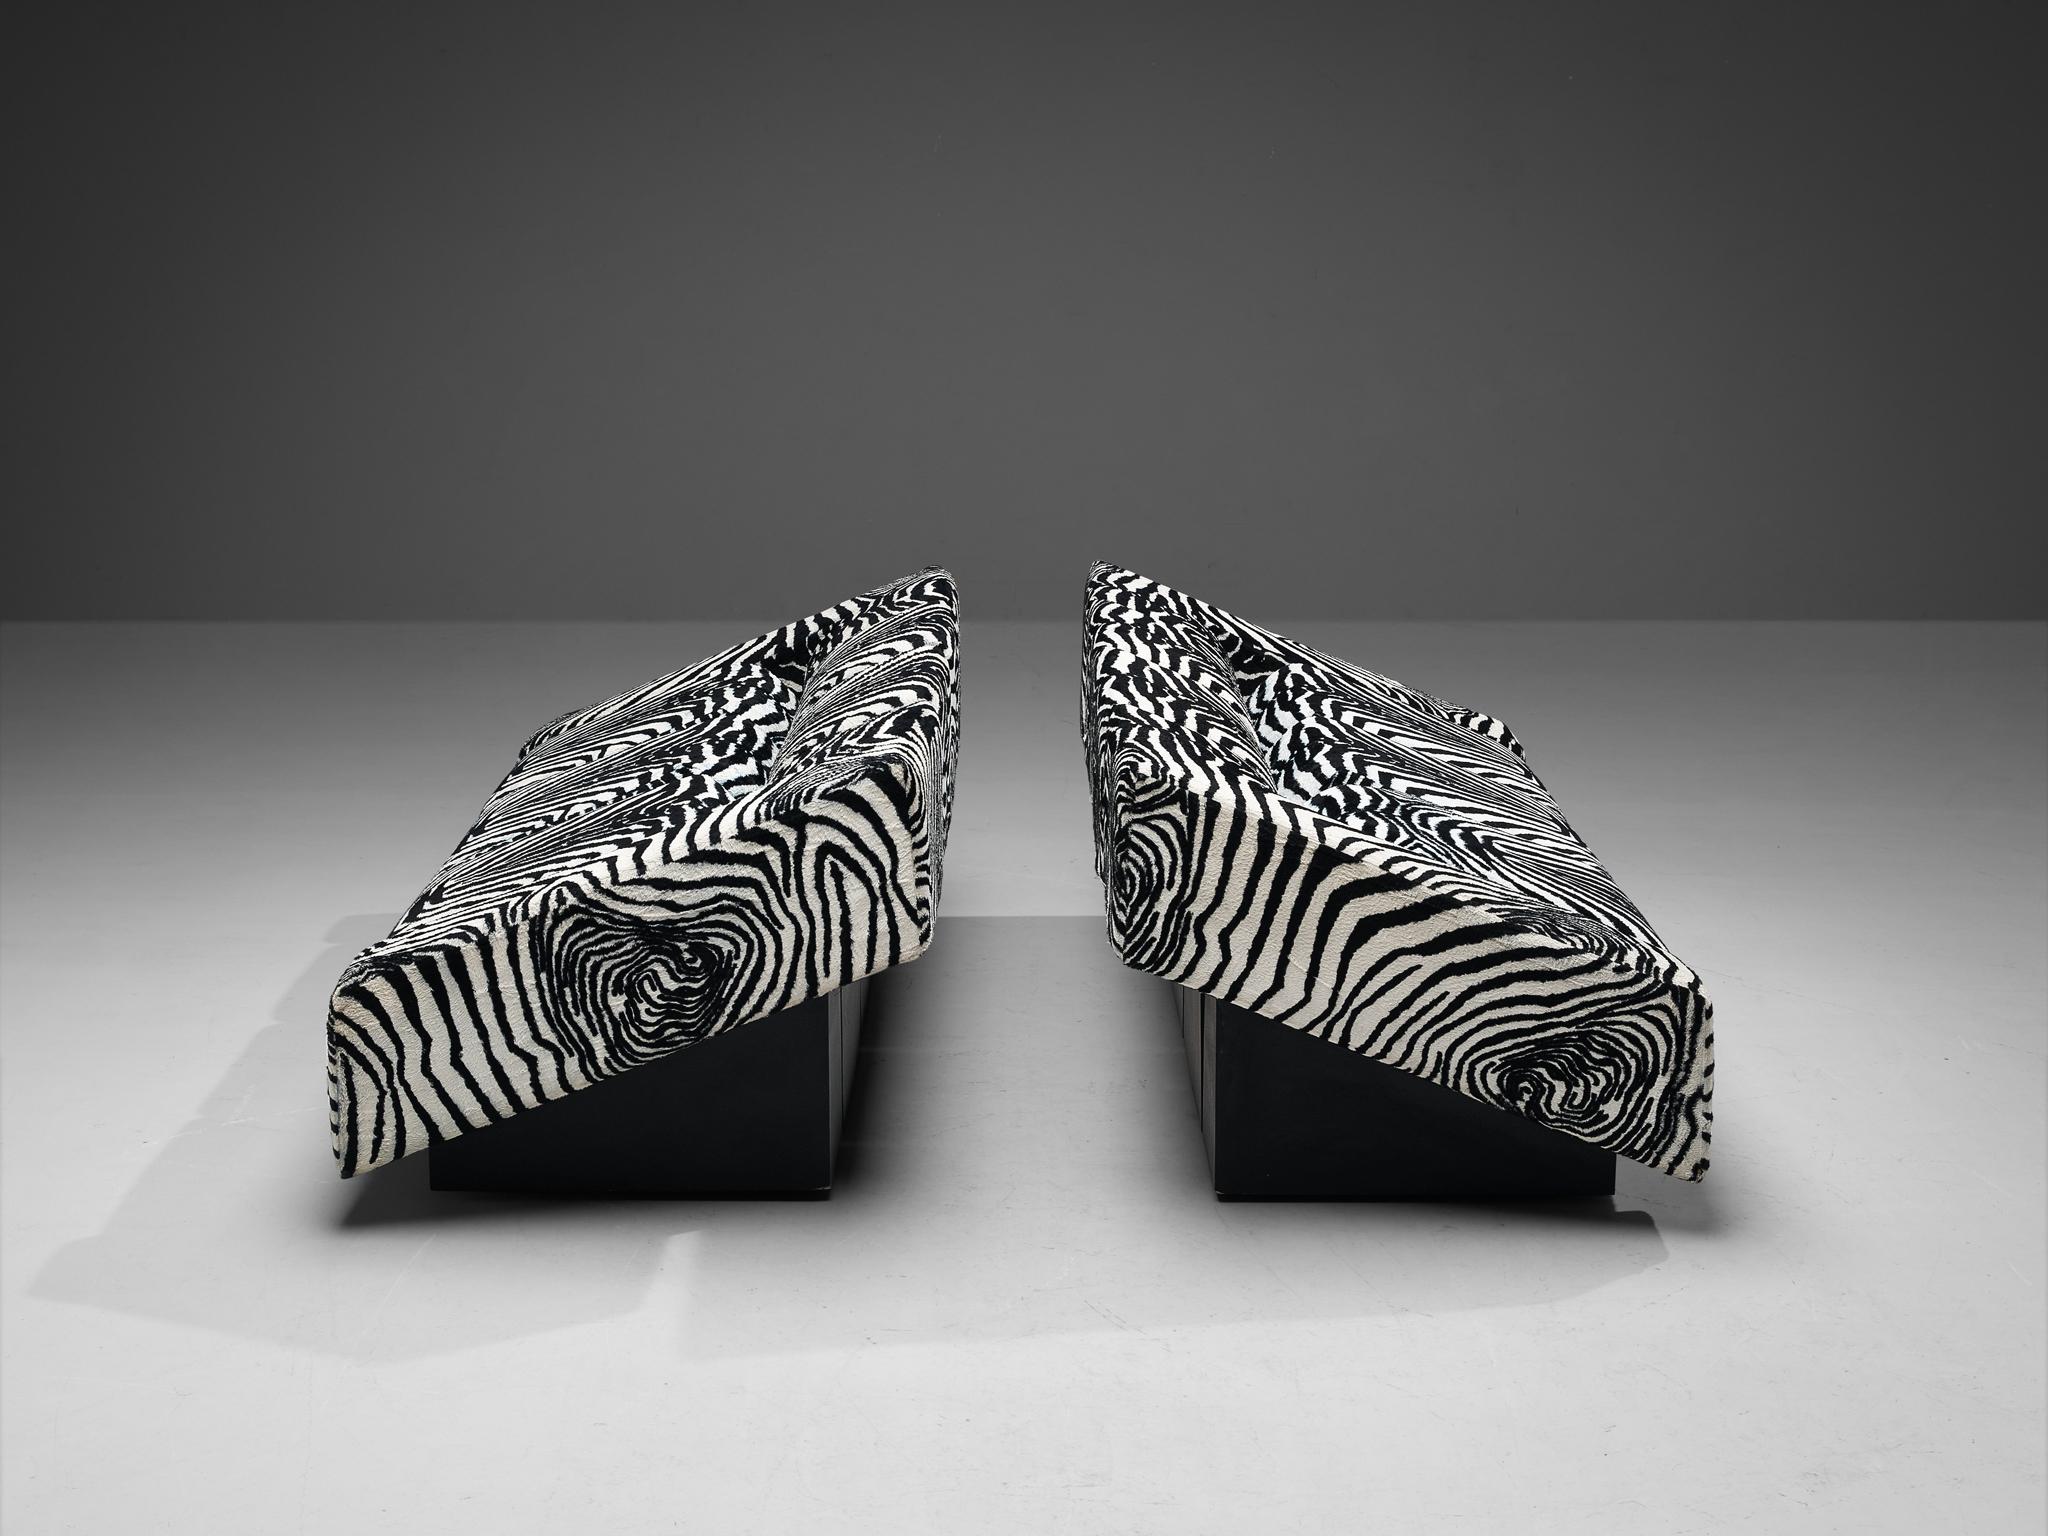 Italian Mario Botta for Alias Pair of 'Obliqua' Sofa's in Zebra Print Upholstery 